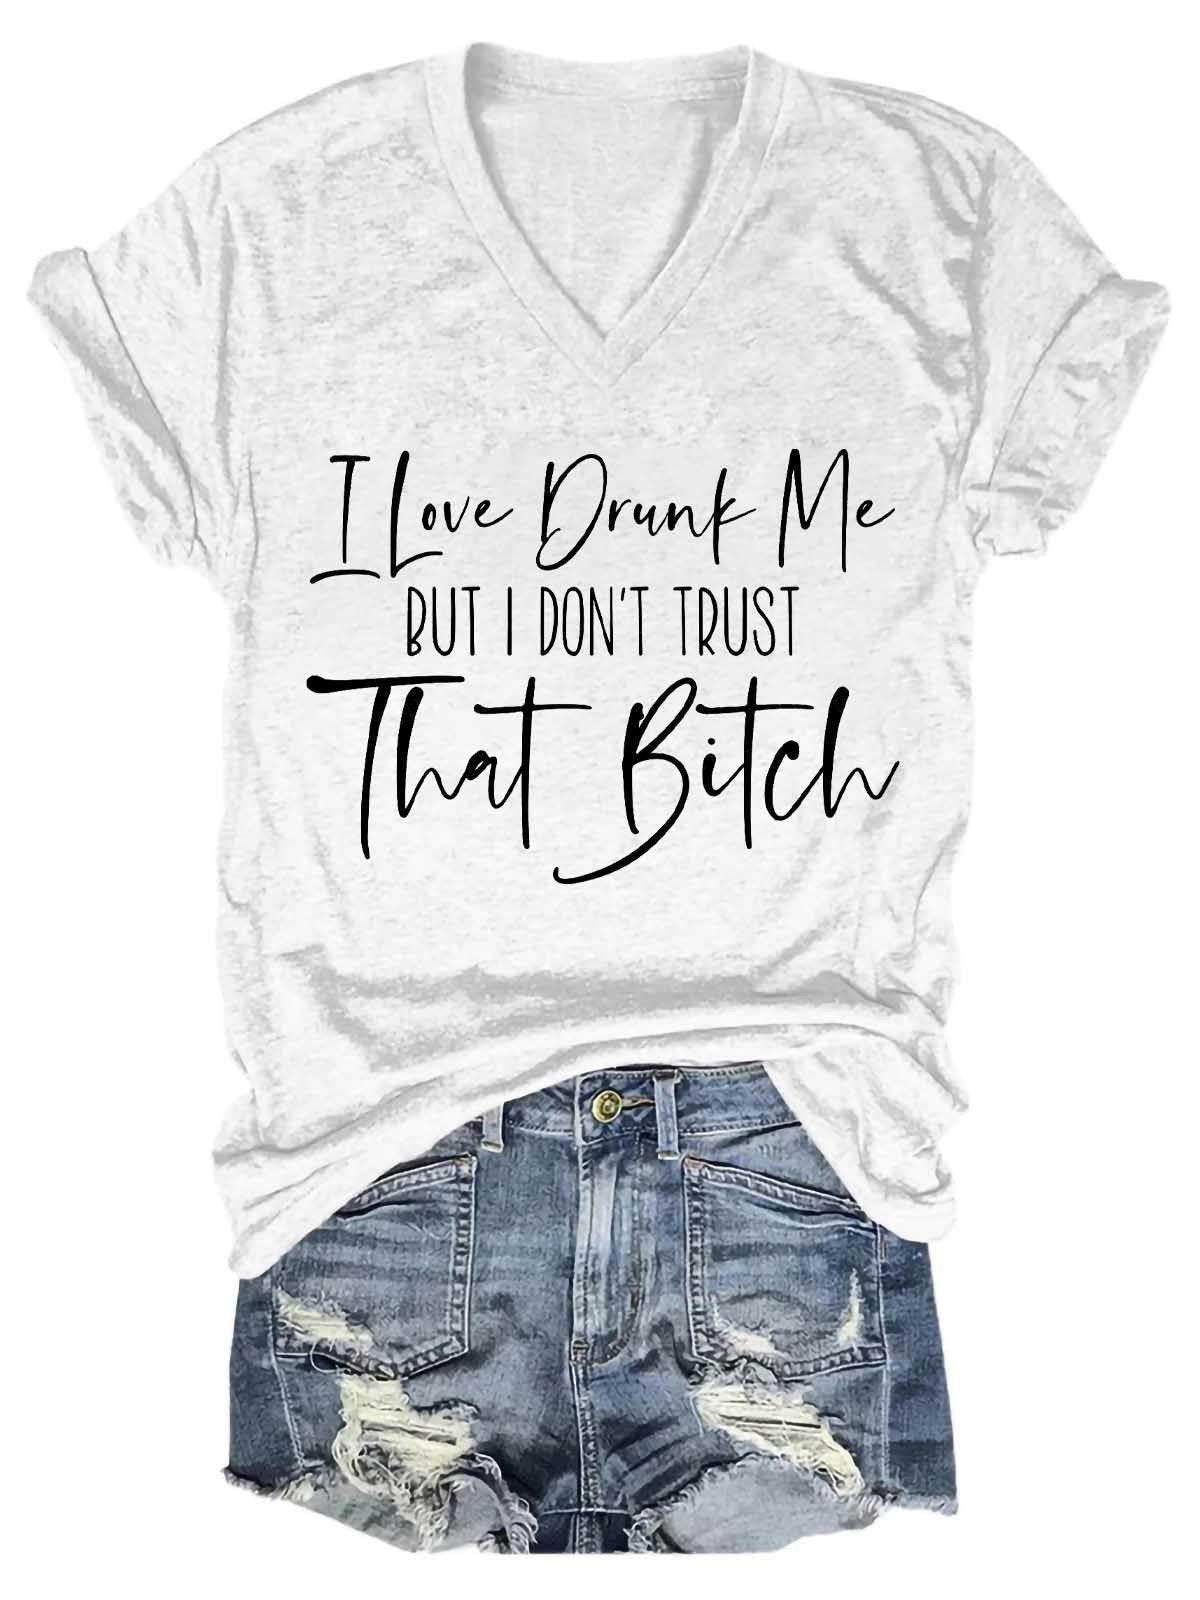 Women's I Love Drunk Me But I Don't Trust Her V-Neck T-Shirt - Outlets Forever